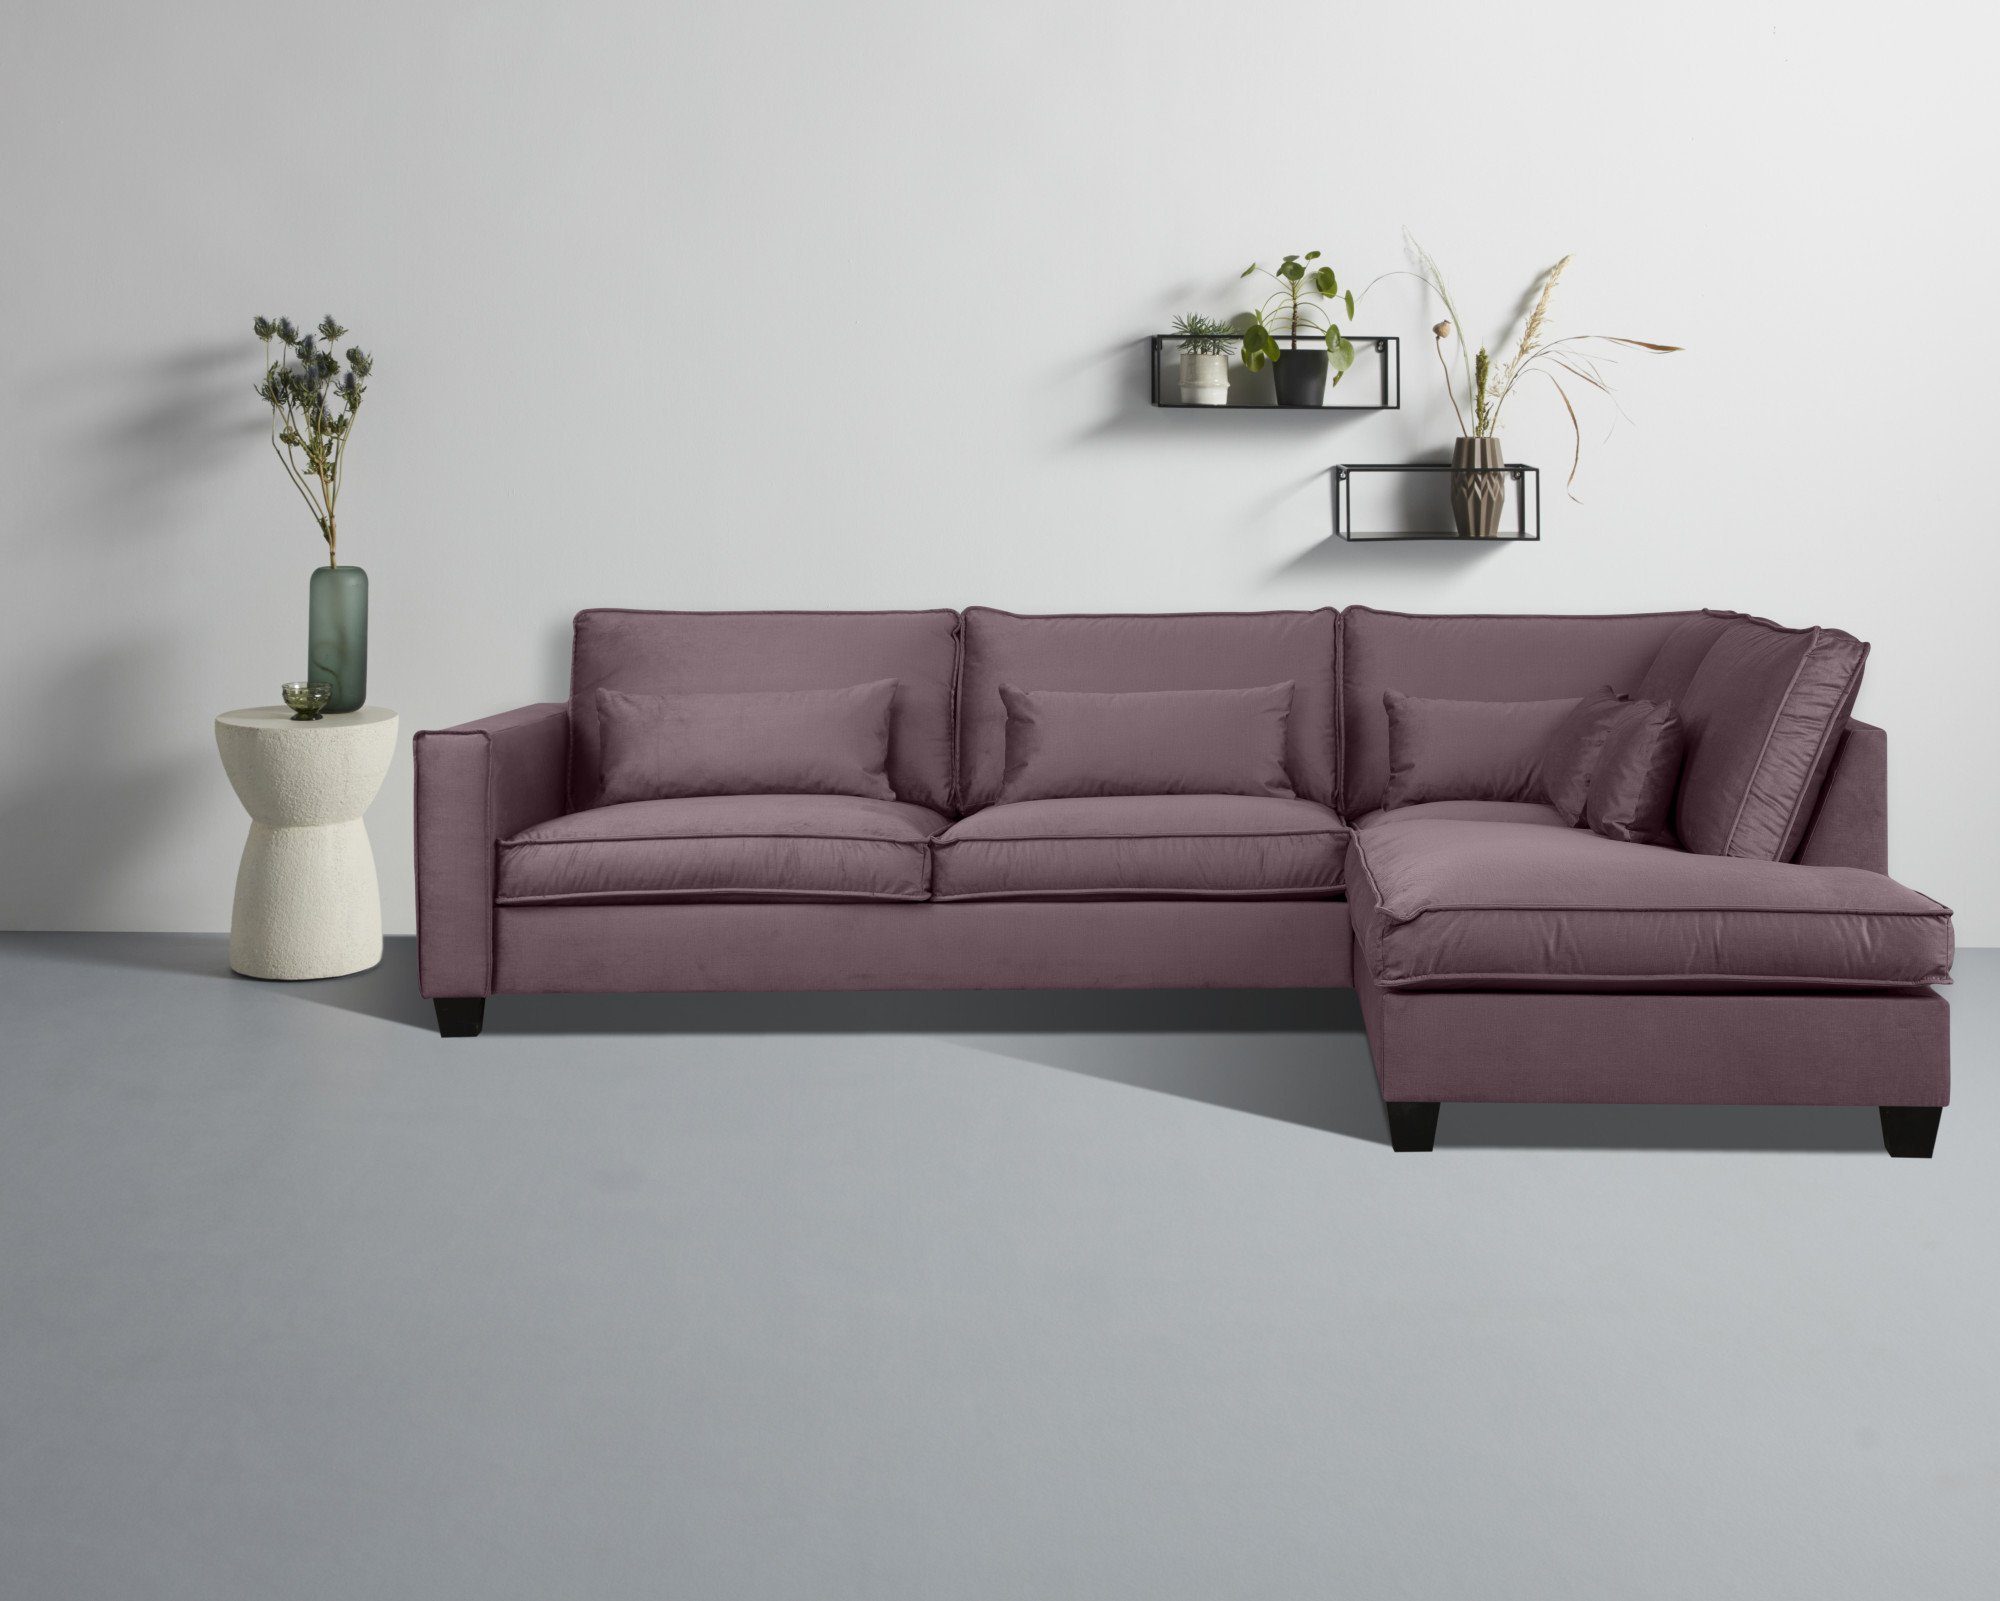 Home affaire Ecksofa Tilques, bequeme Sitzgelegenheiten, viele Farben verfügbar violet pink